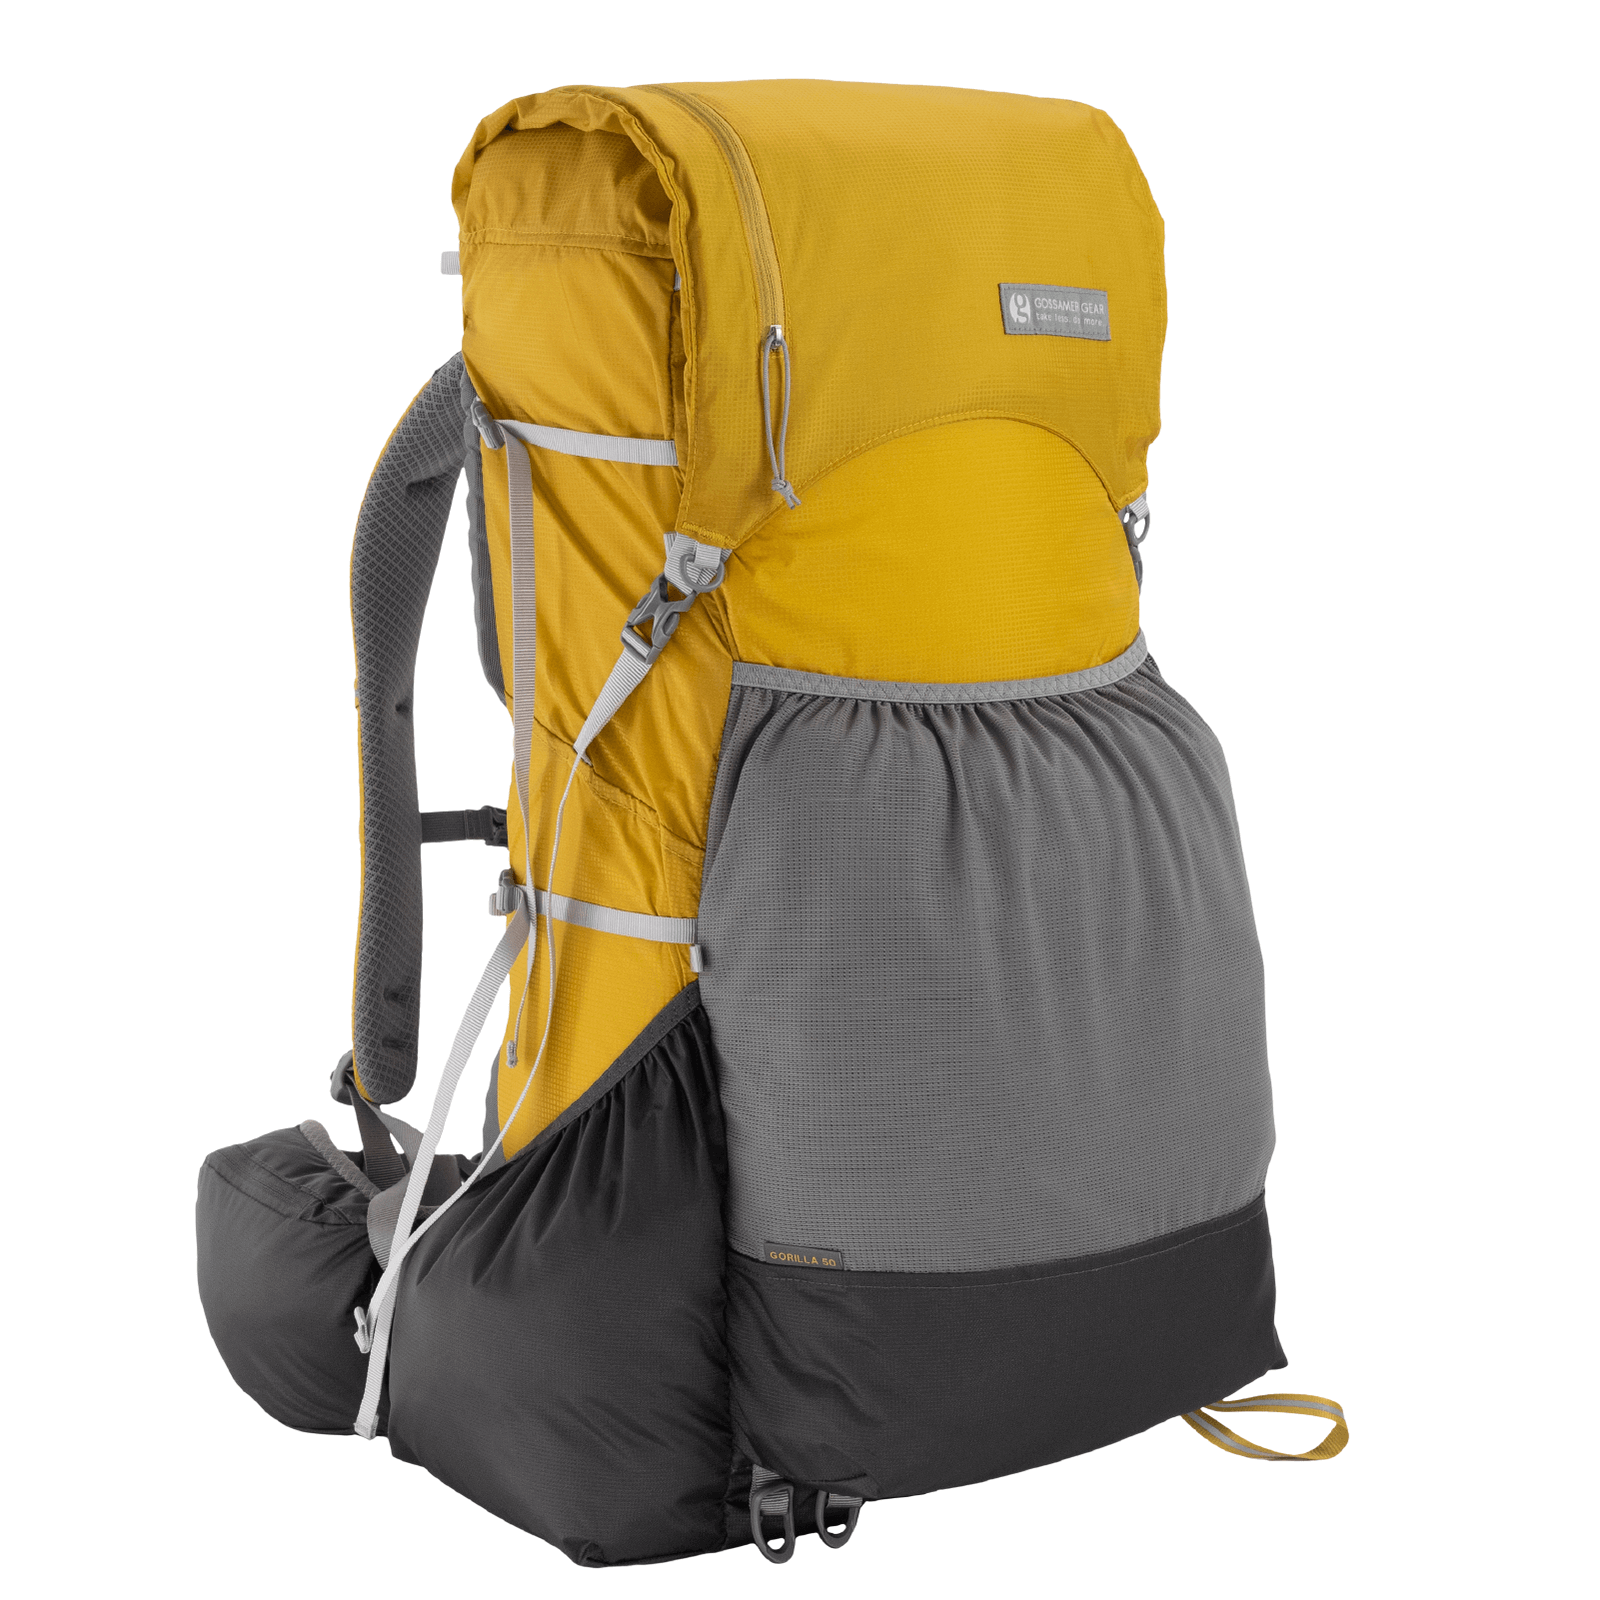 Gorilla 50 Ultralight Backpack | Gossamer Gear| ゴッサマーギア 